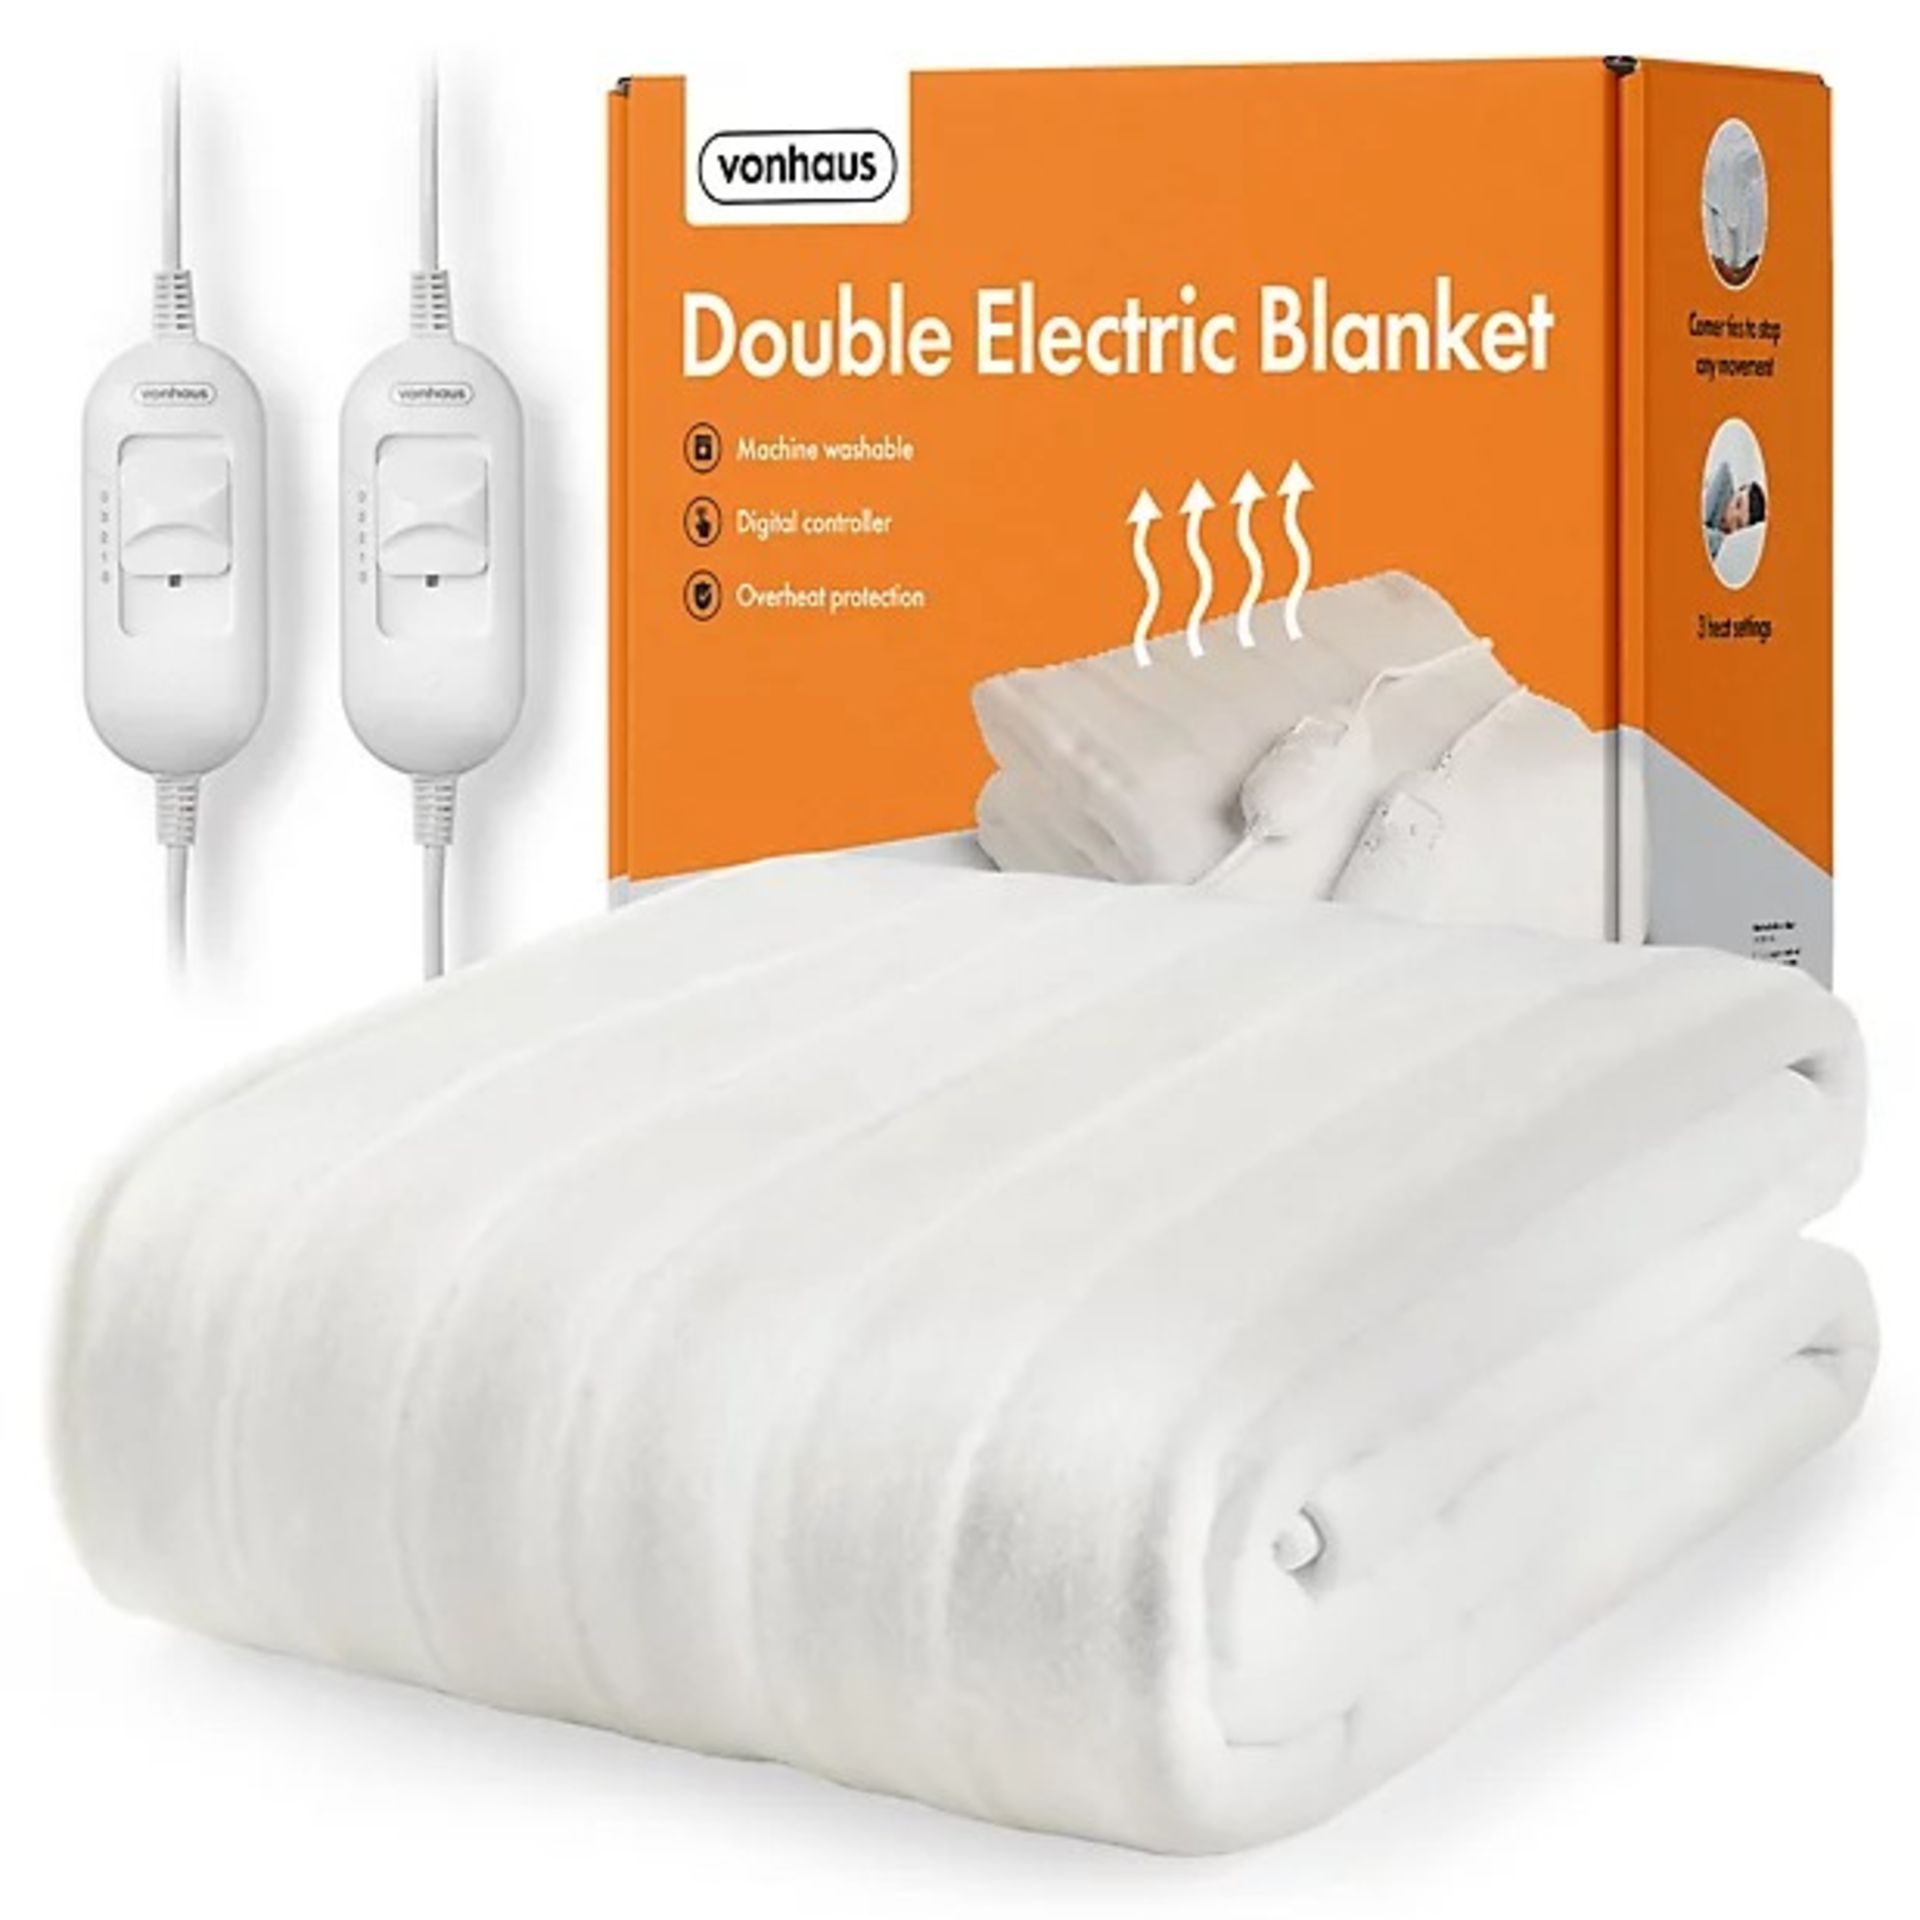 Heated Under Blanket (Double) - ER37